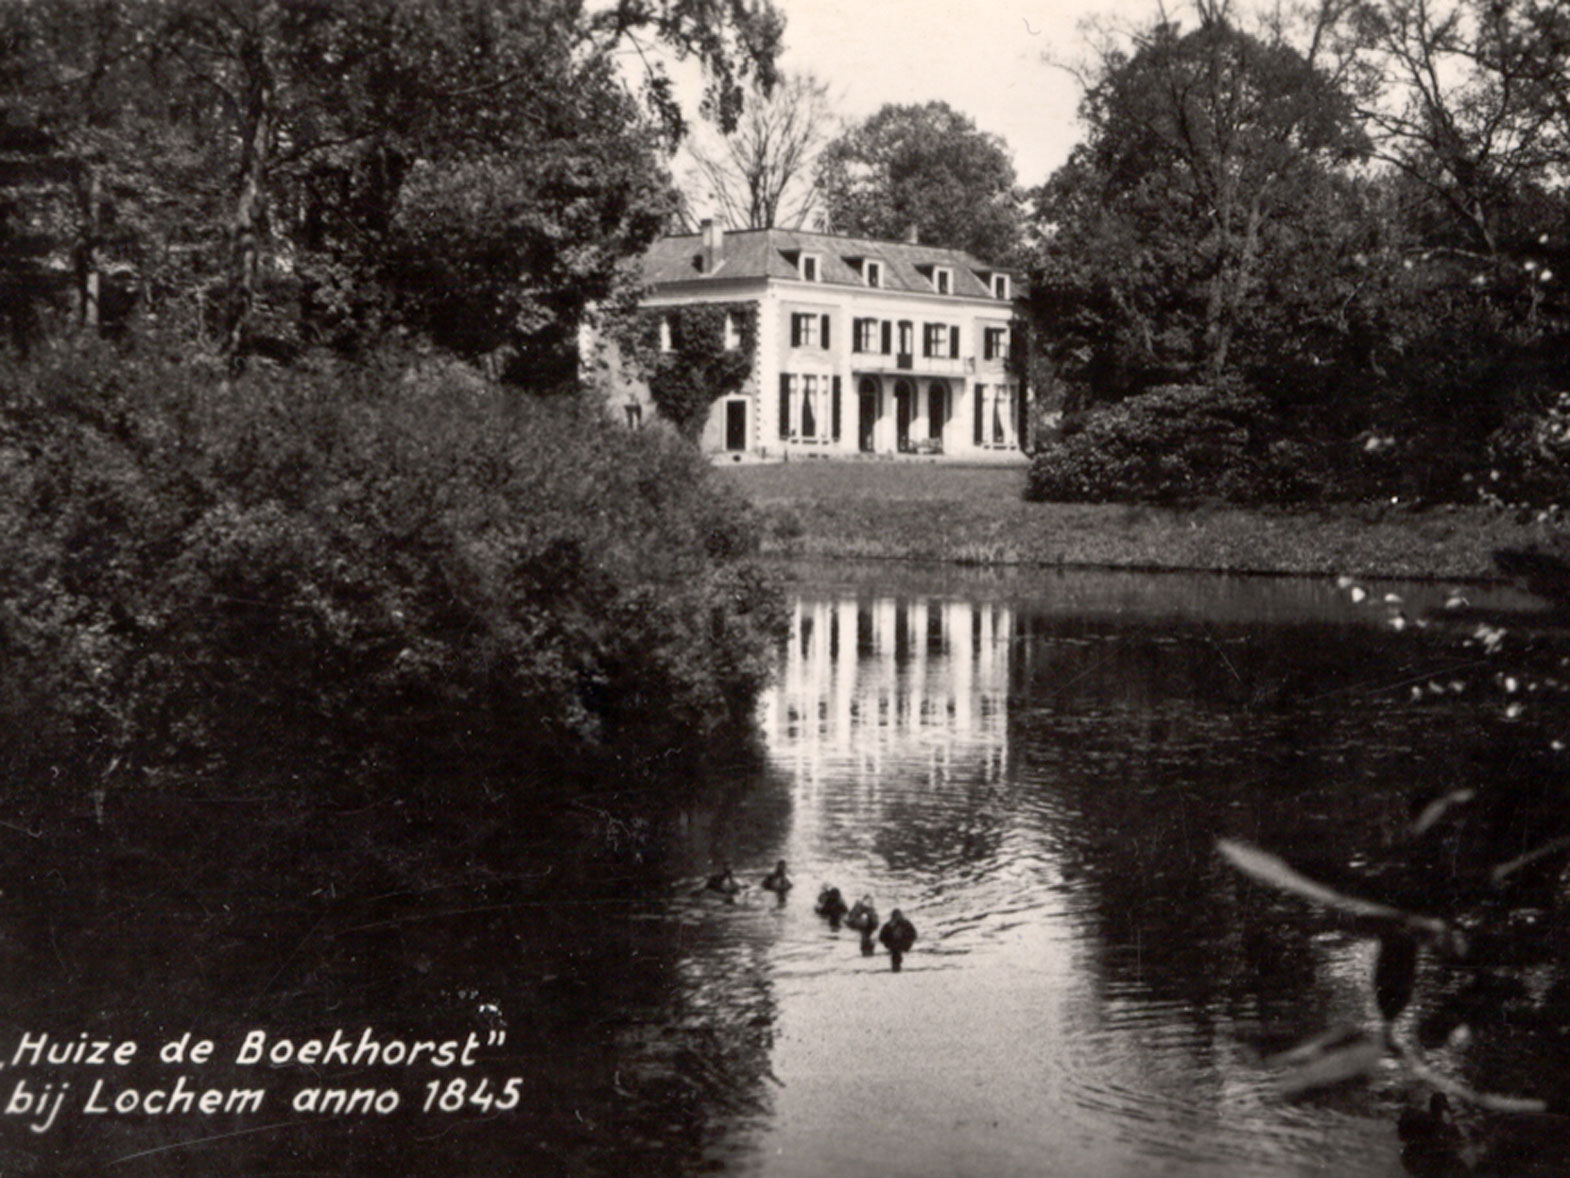 Huize de Boekhorst